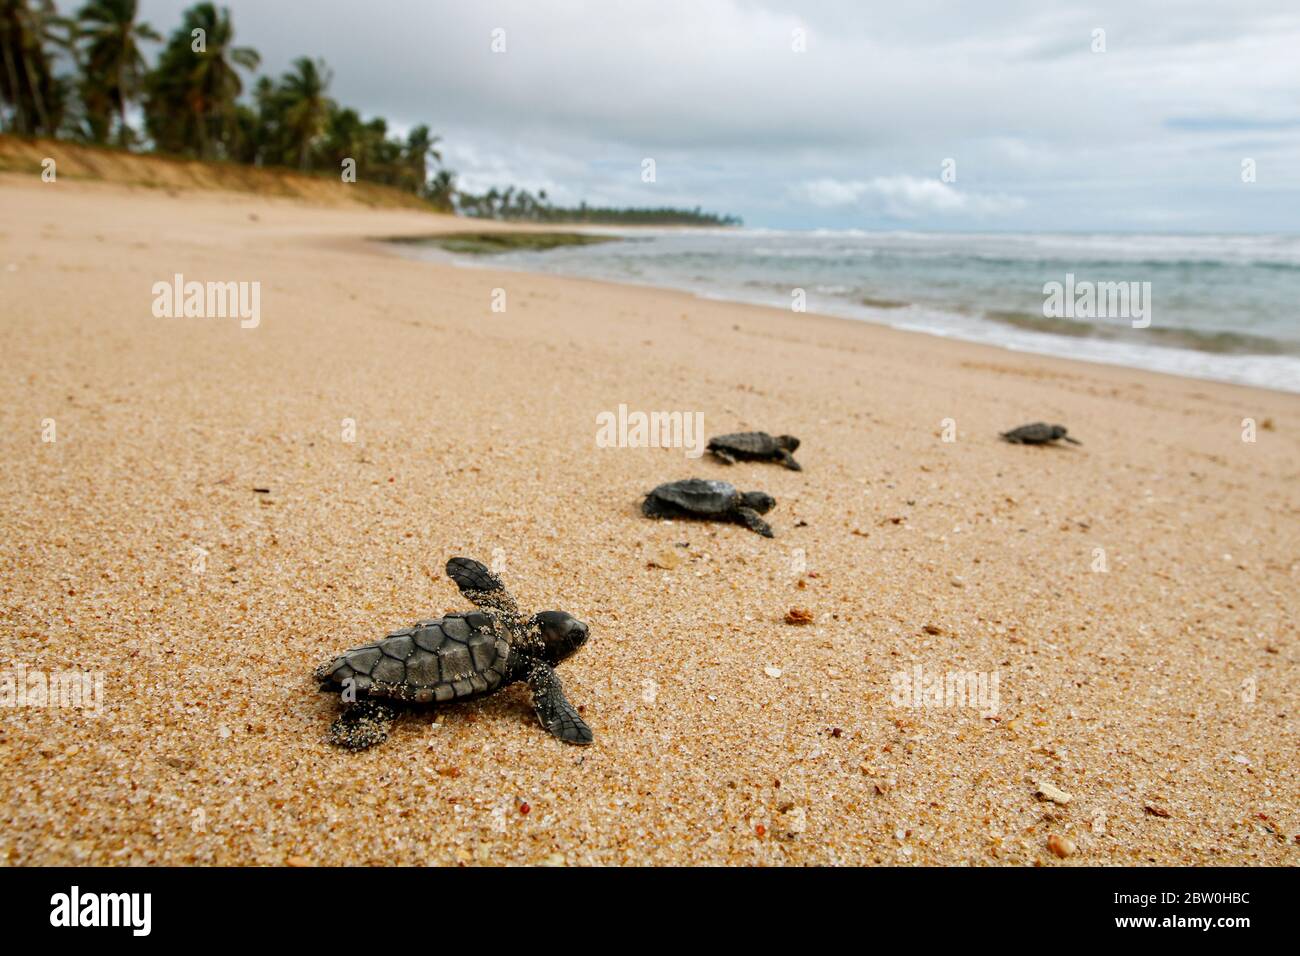 Baby sea turtle hatchling, hawksbill (Eretmochelys imbricata), crawling  to sea after leaving nest at Praia do Forte beach on Bahia coast, Brazil Stock Photo